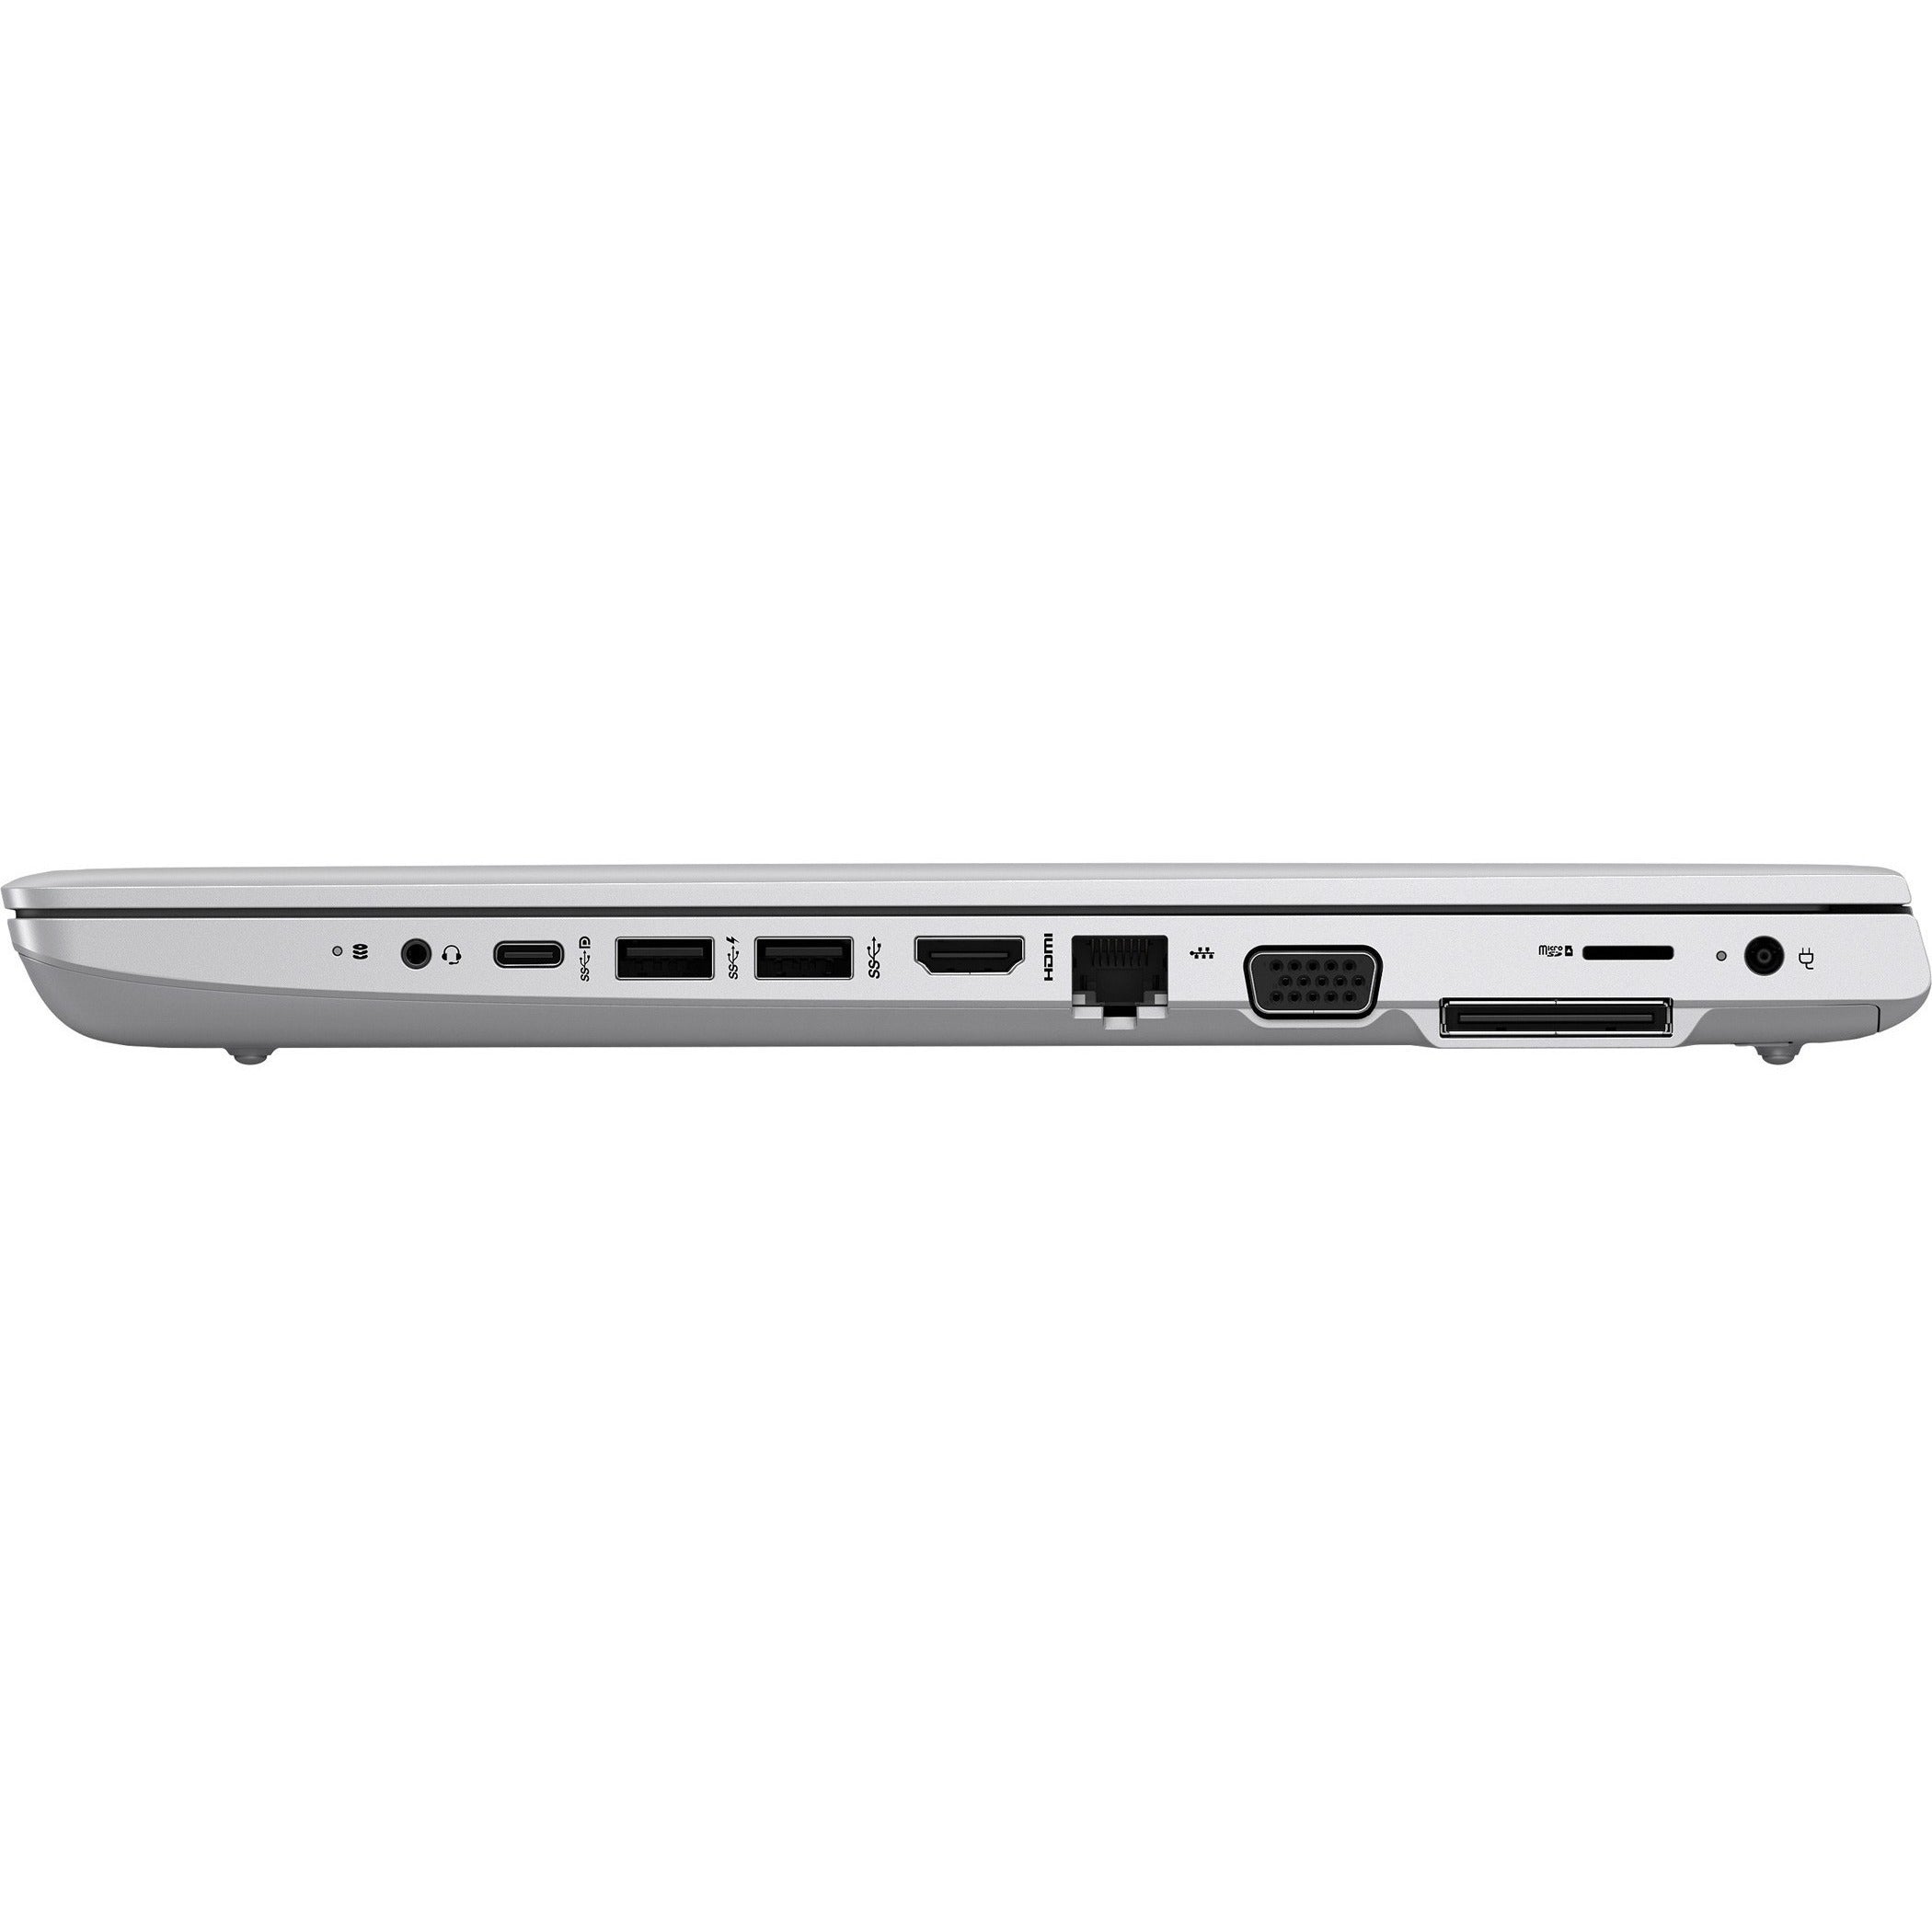 HP ProBook 650 G5 NoteBook PC Laptop Price in